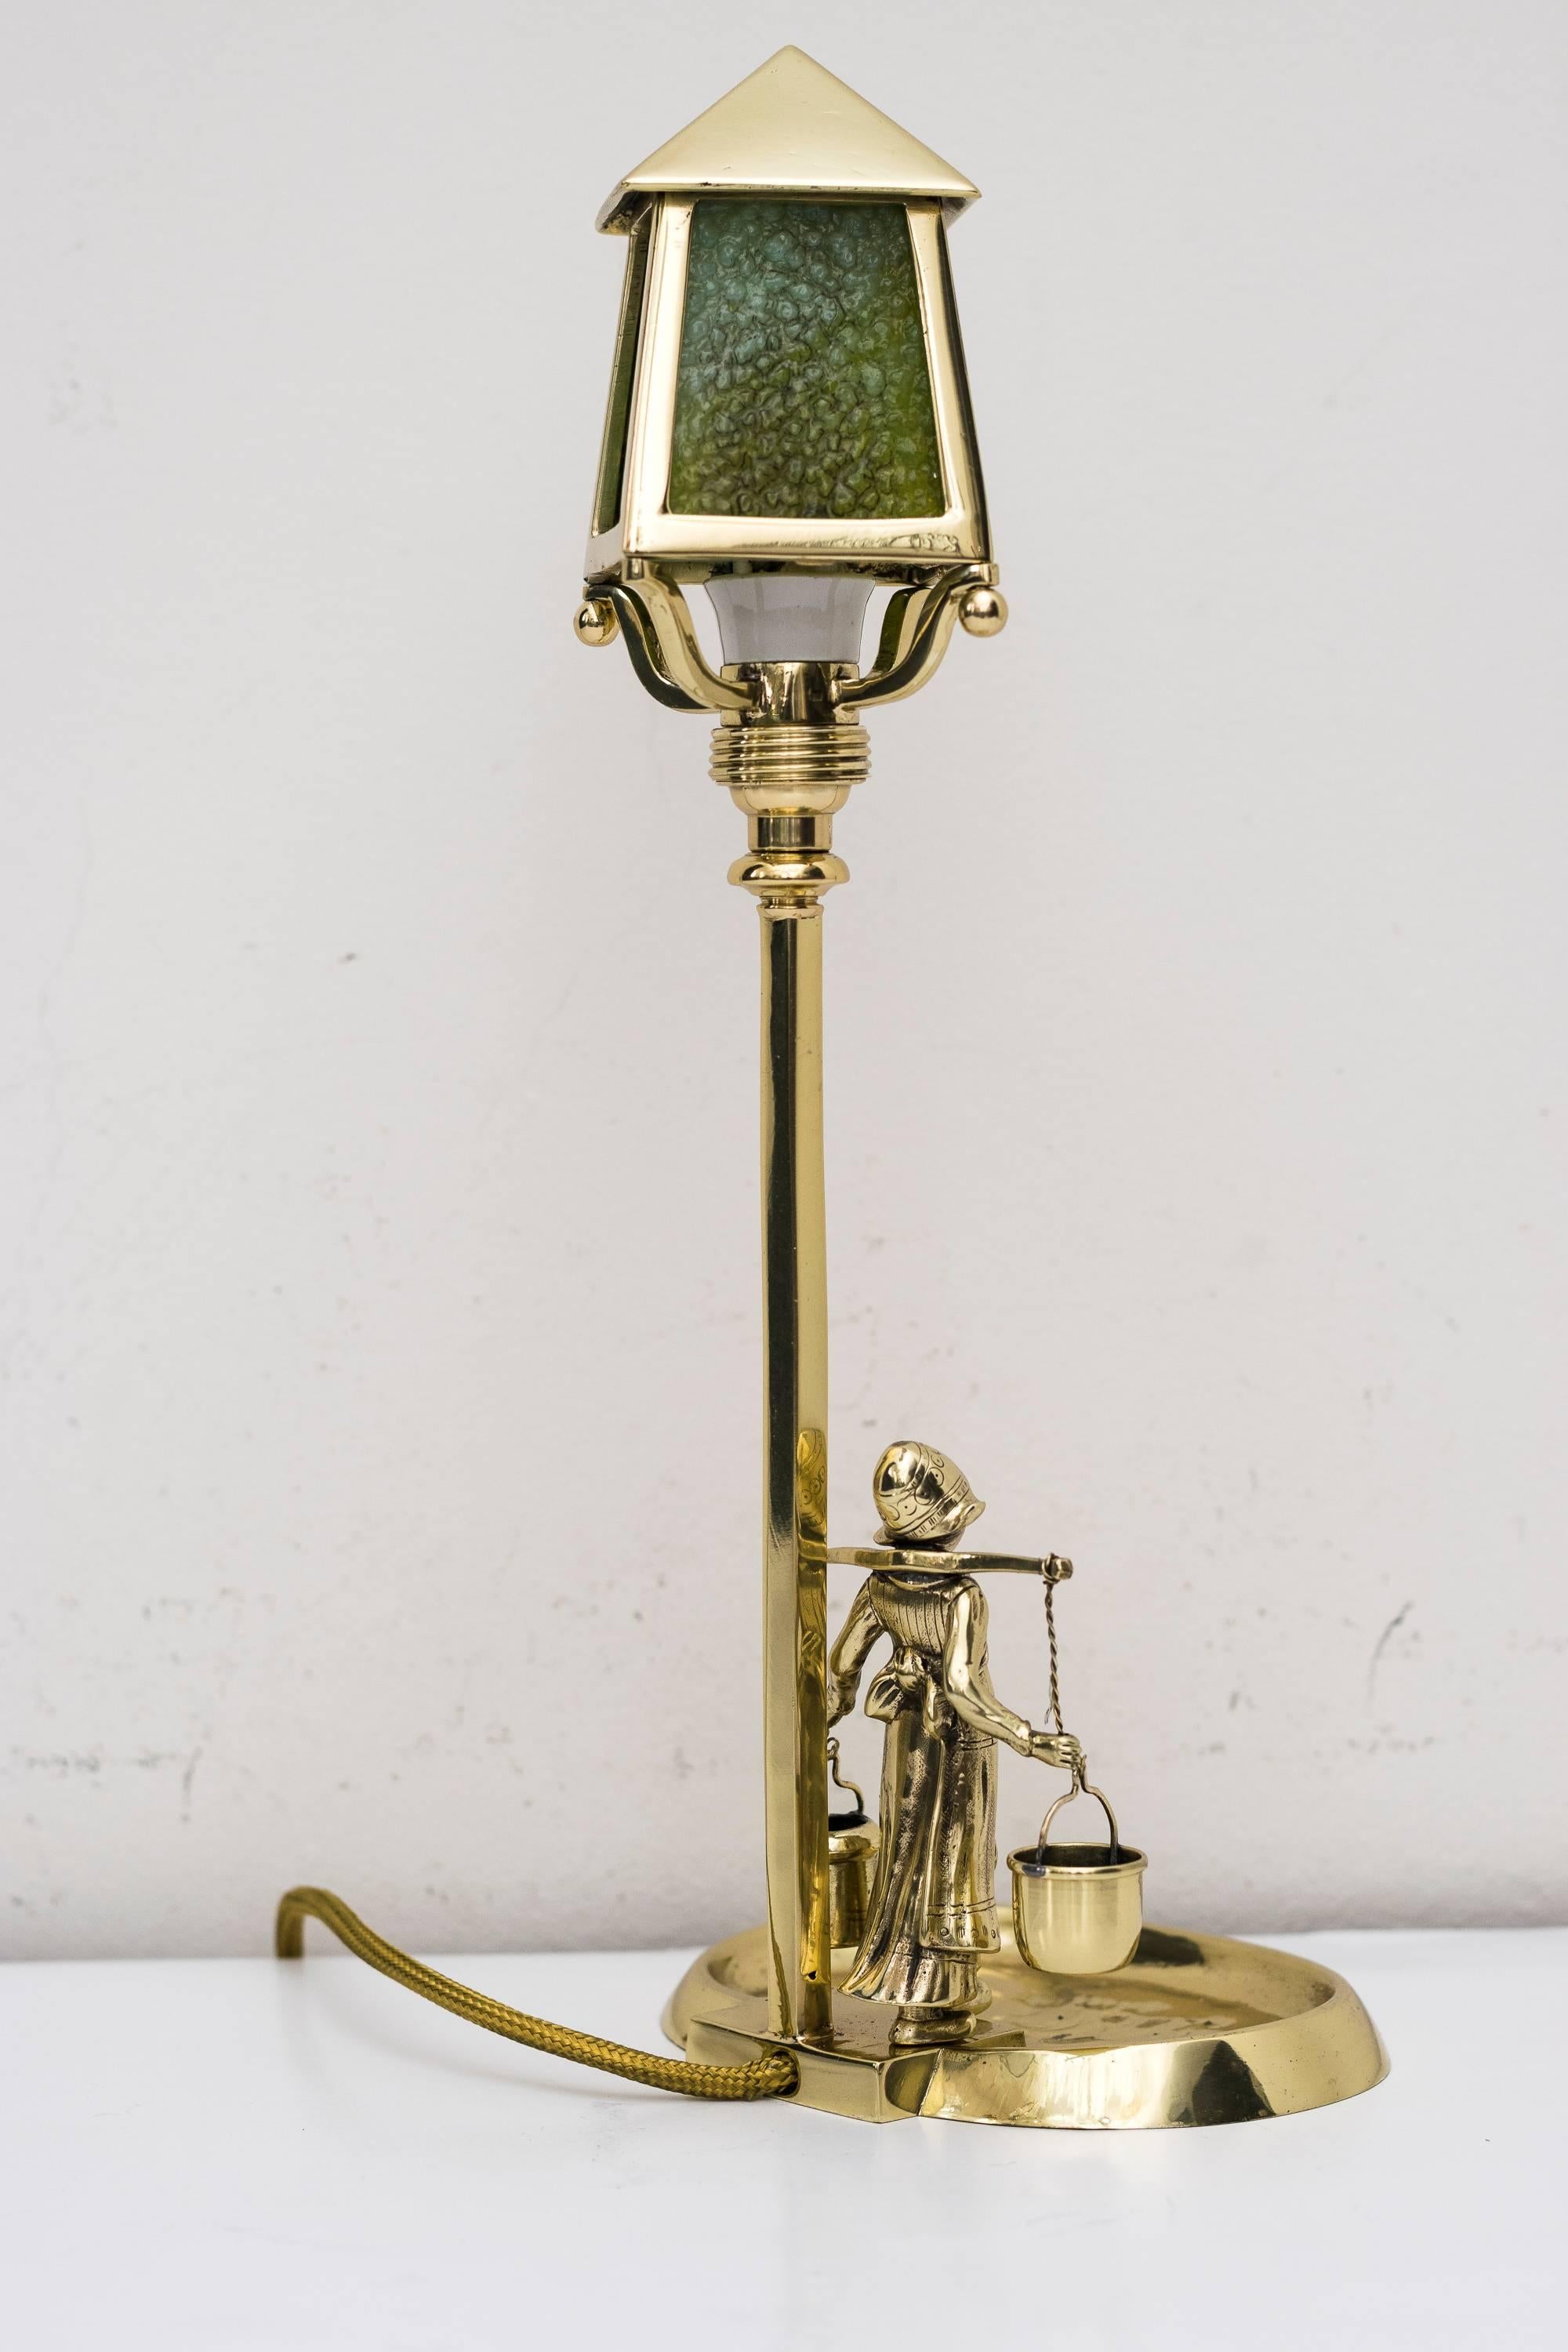 Austrian Jugendstil Table Lamp with Green Opaline Glass